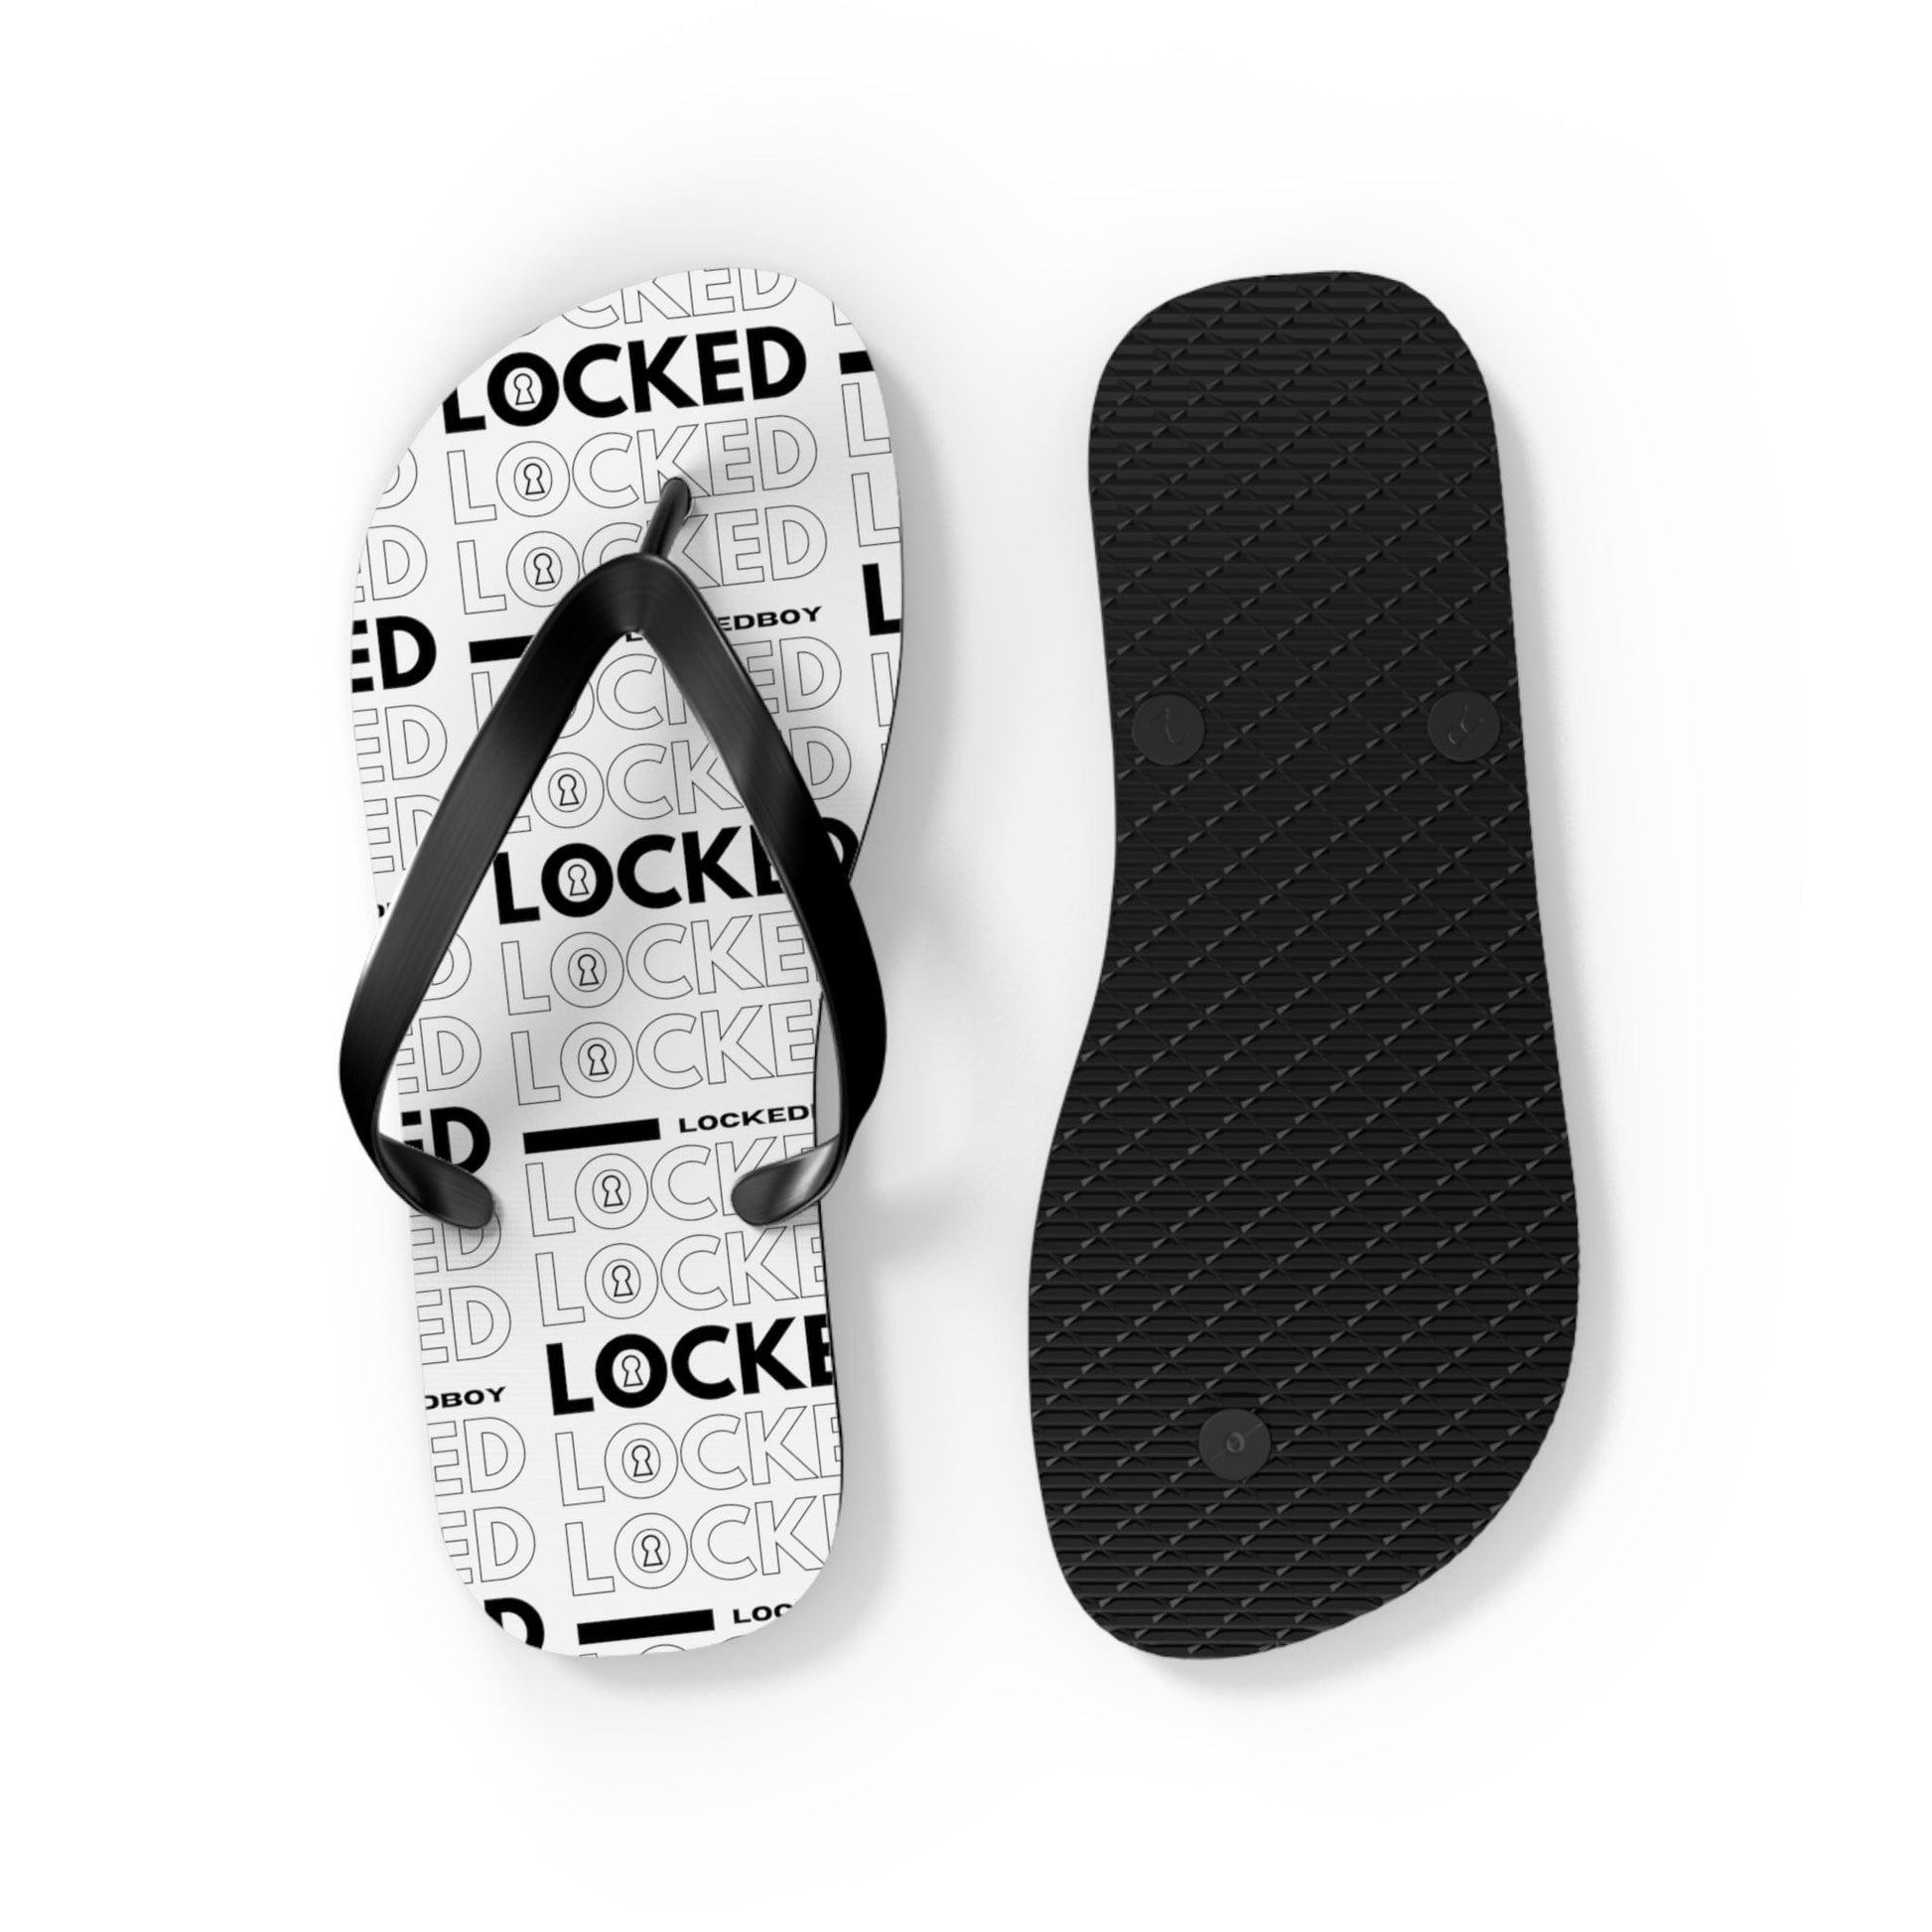 Shoes Lockedboy Bag Inspo Unisex Flip Flops LEATHERDADDY BATOR